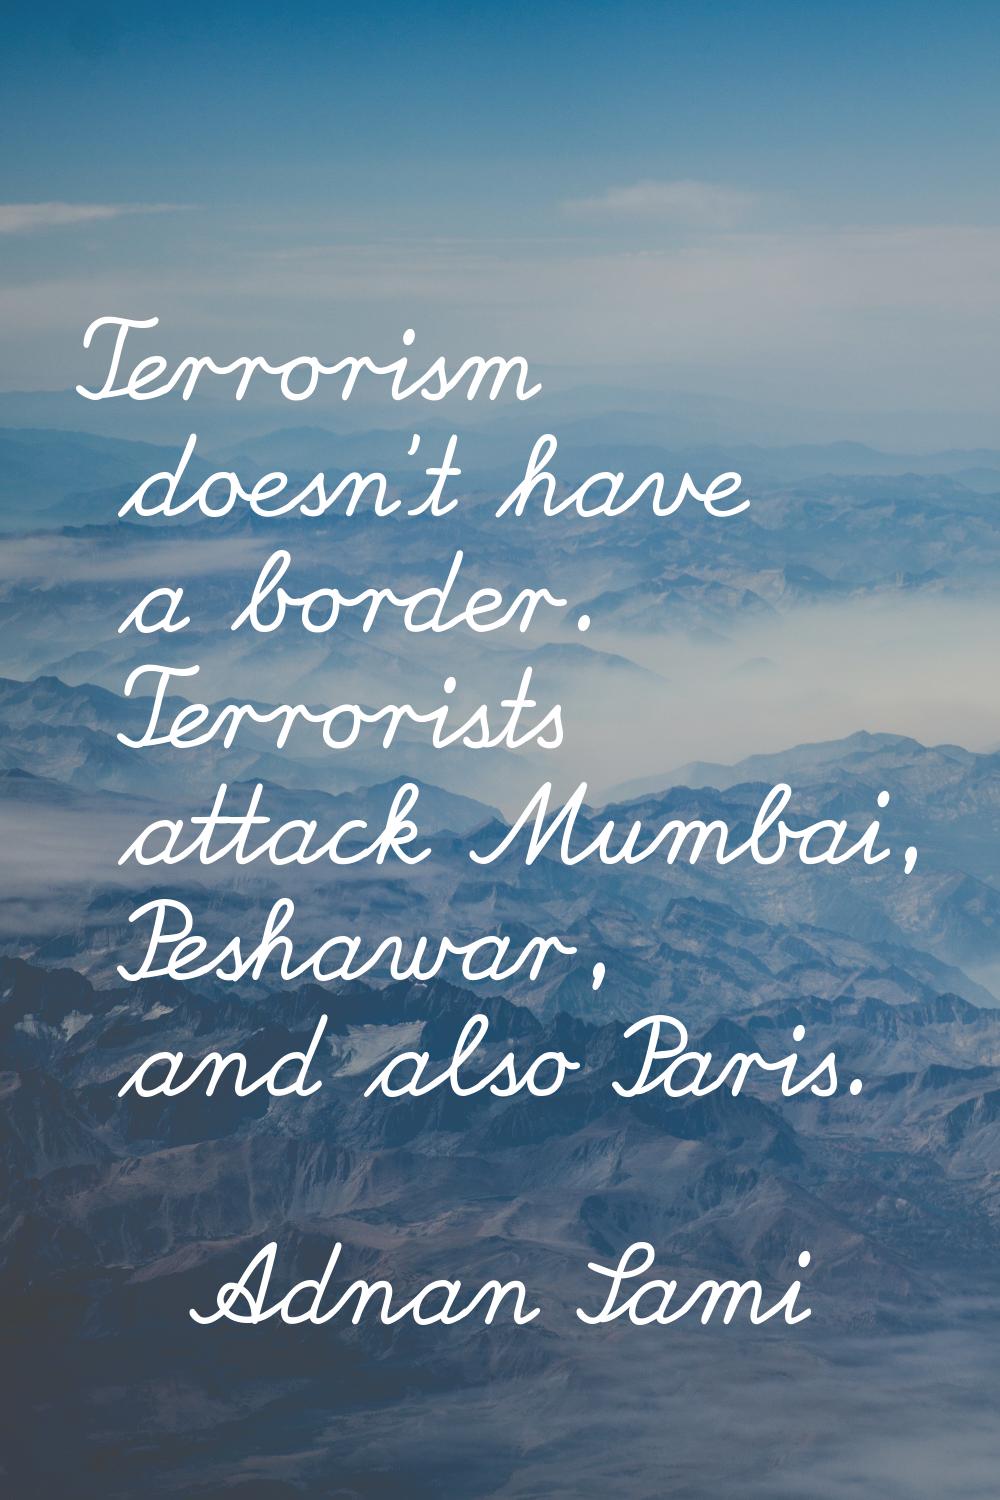 Terrorism doesn't have a border. Terrorists attack Mumbai, Peshawar, and also Paris.